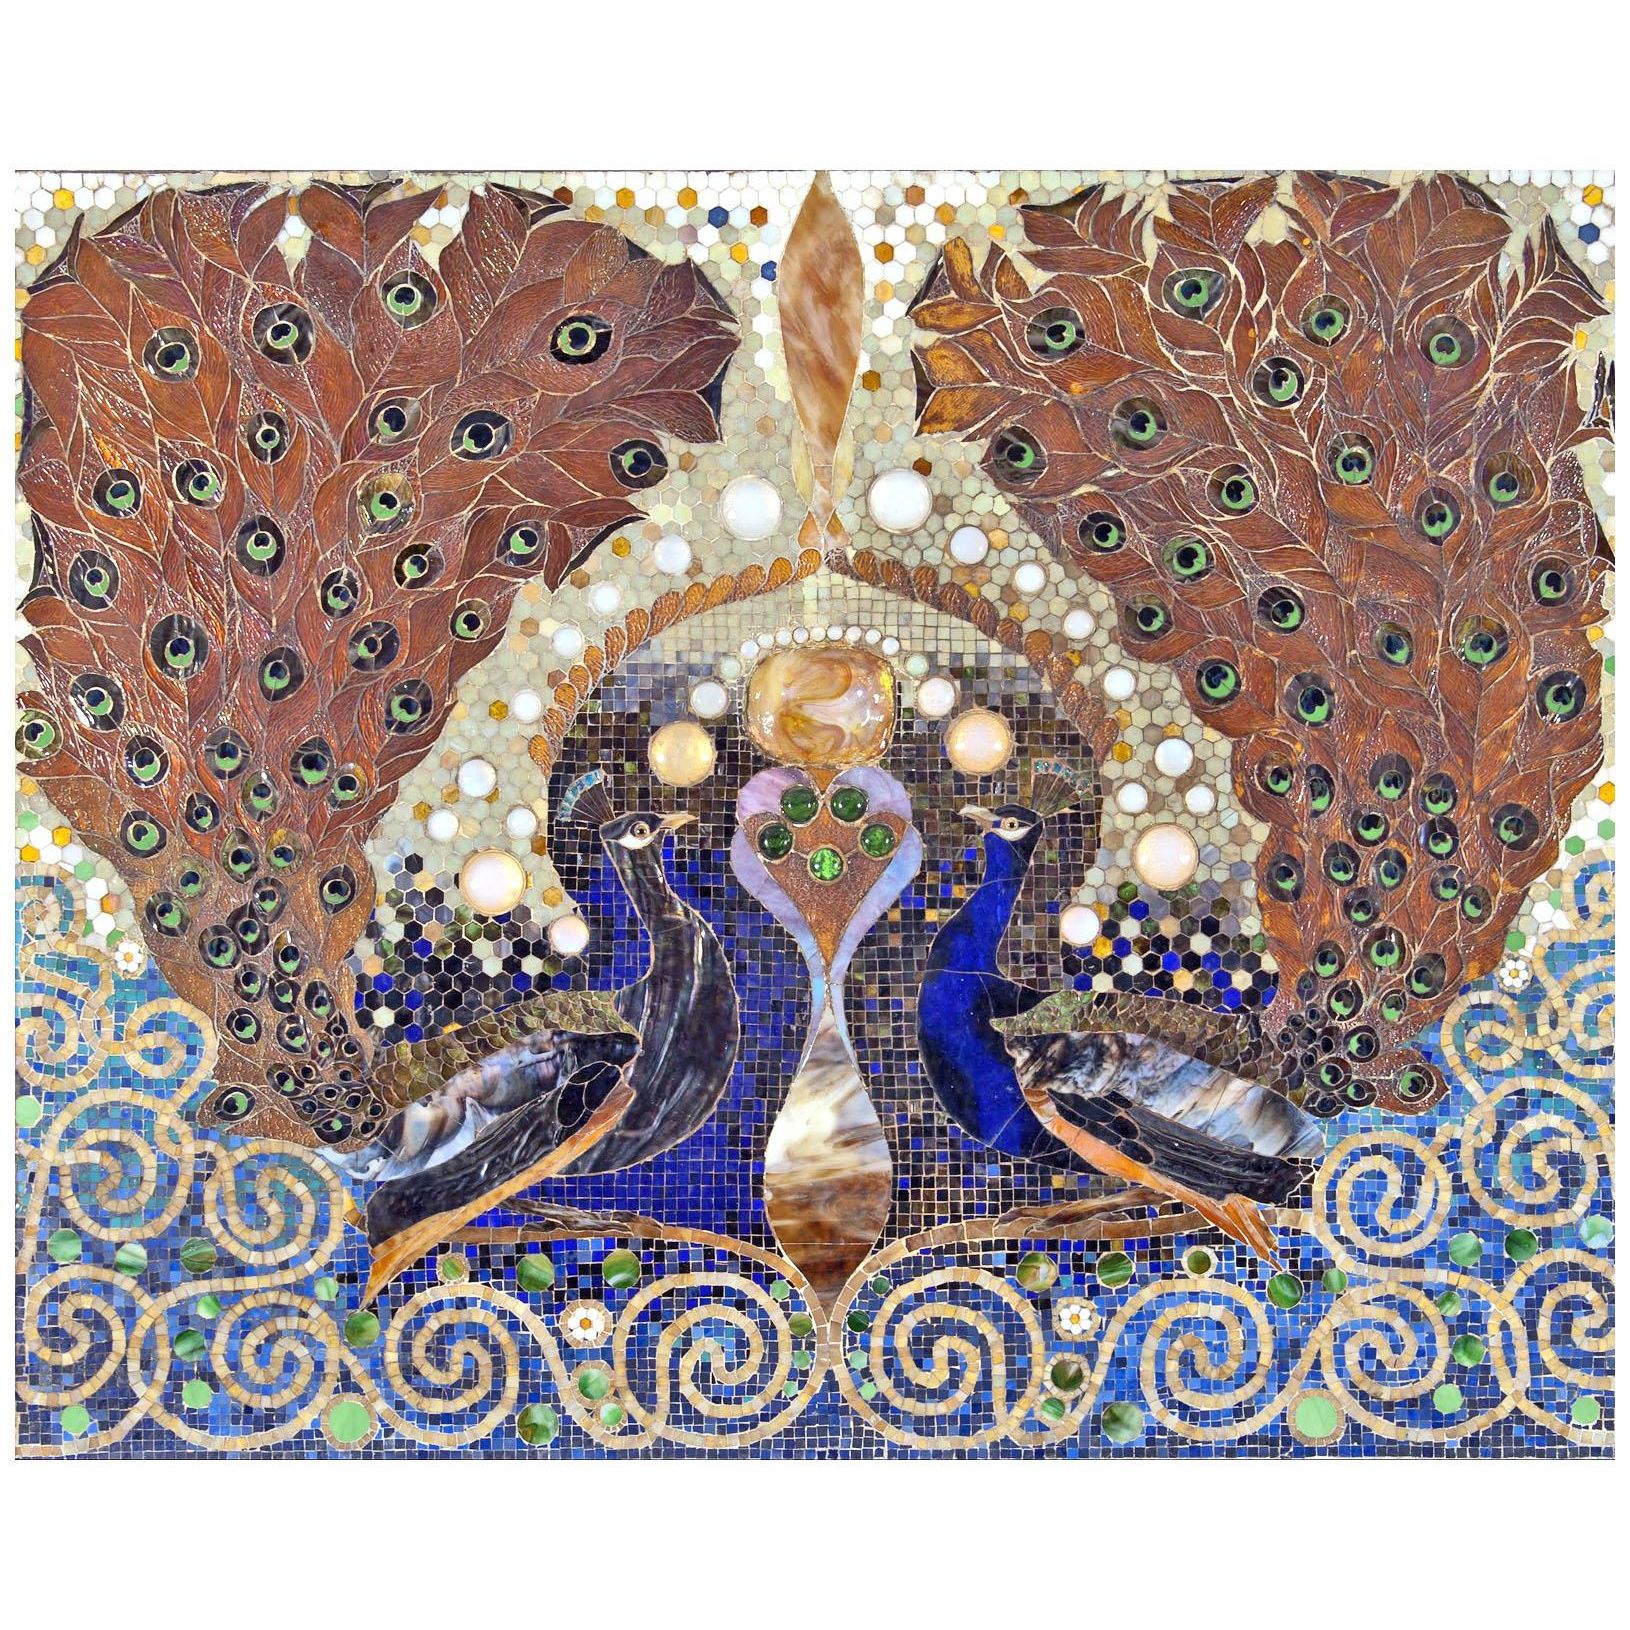 Louis Tiffany. Peacock Mosaic. 1890-1891. Havemeyer House, New York